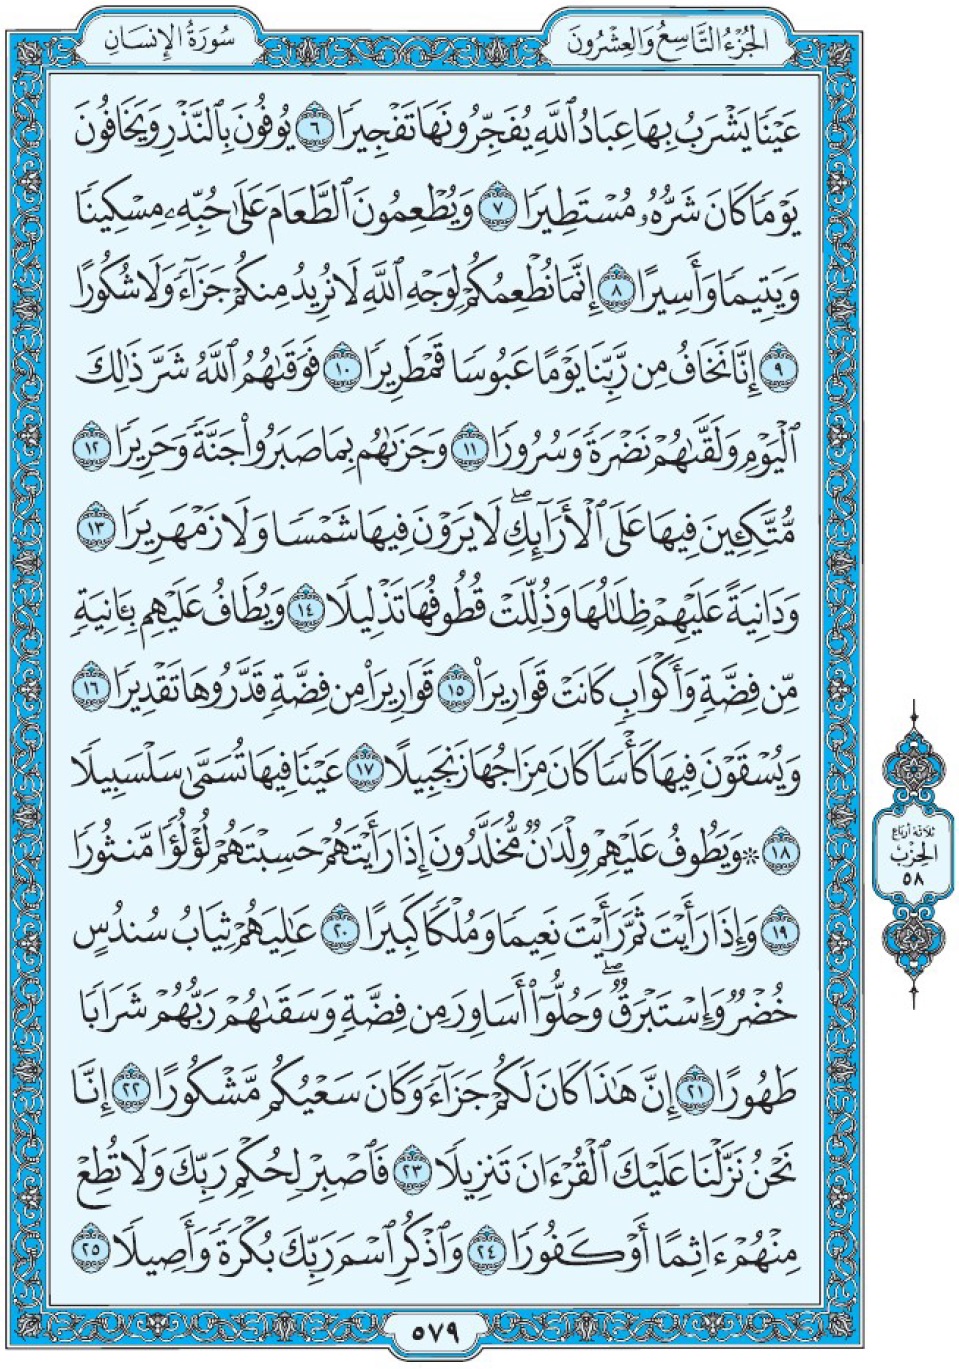 Коран Мединский мусхаф страница 579, аль-Инсан, аят 6-25